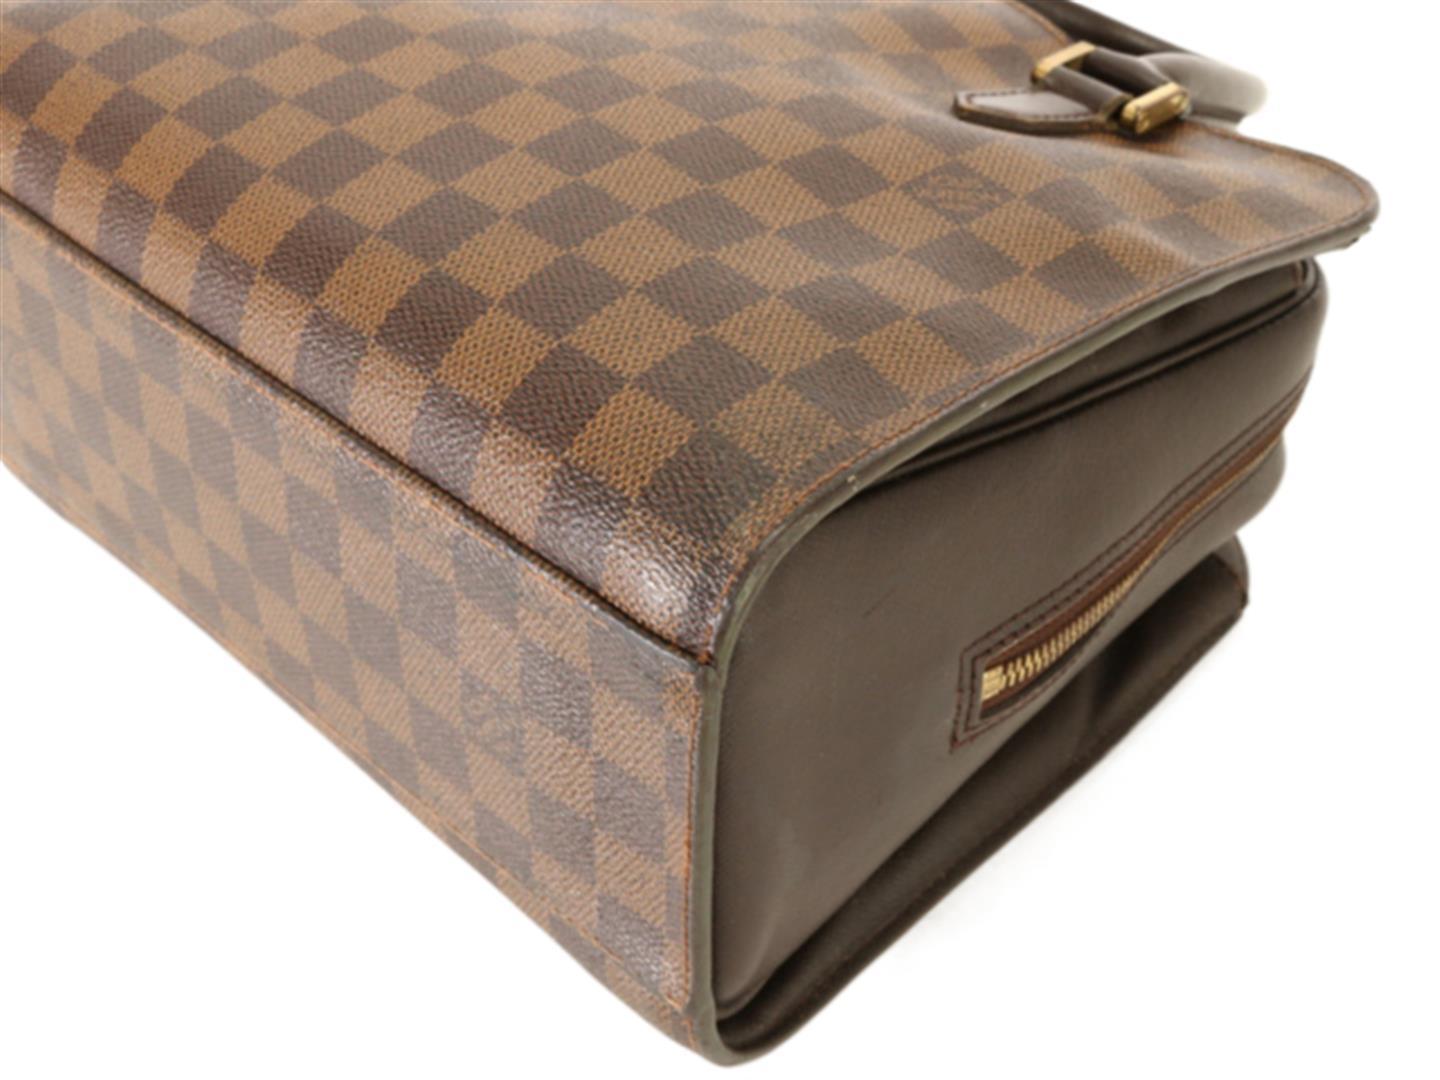 Louis Vuitton Damier Ebene Canvas Leather Triana Handbag